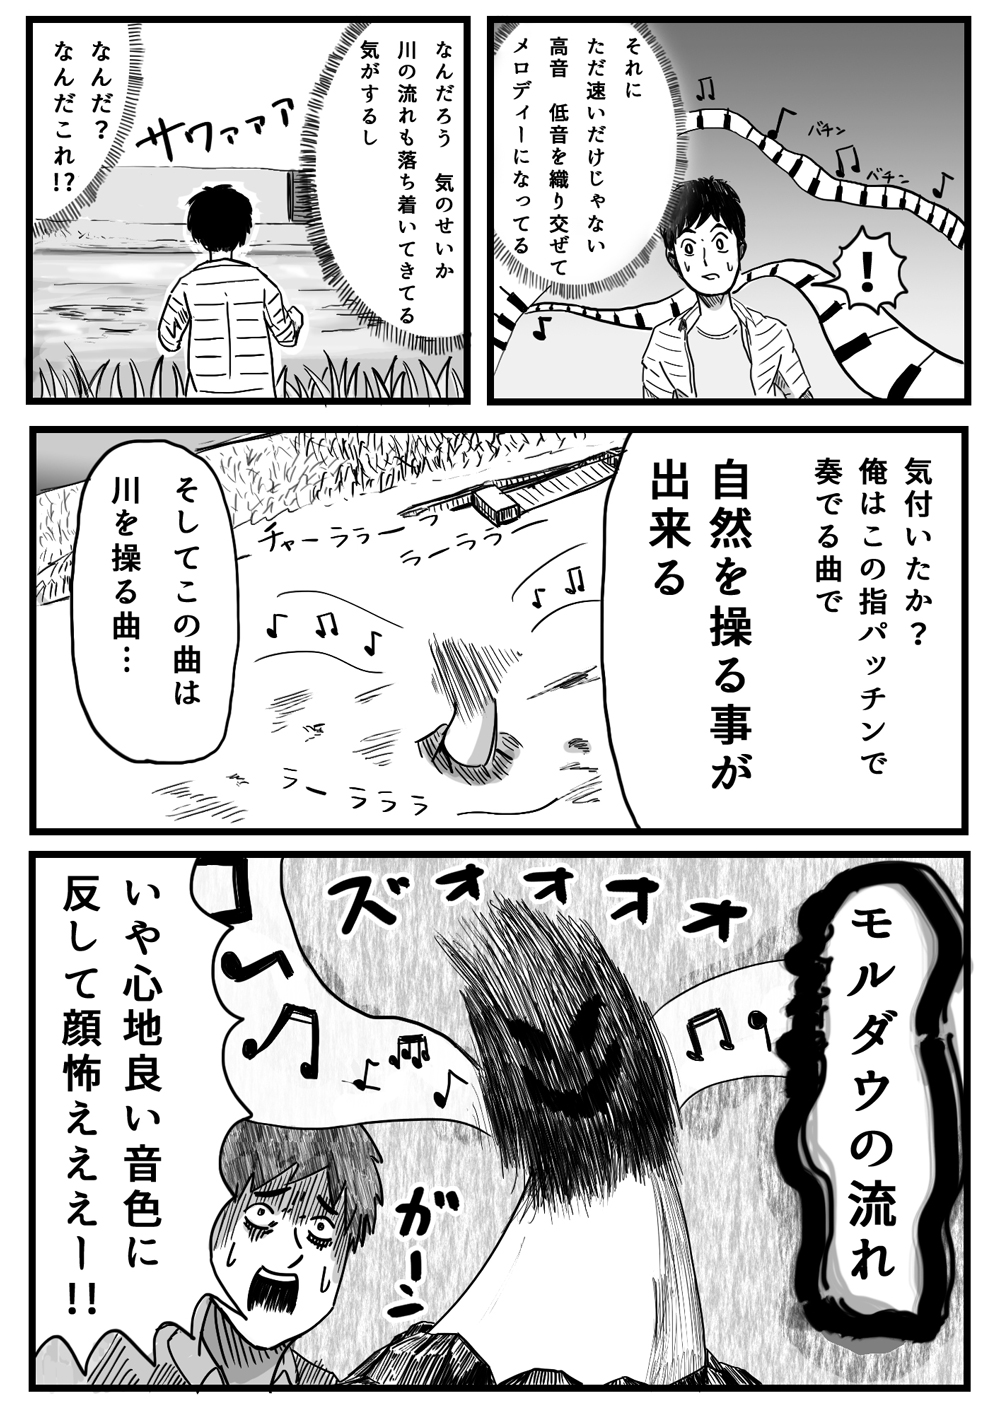 arnolds-hasegawa-002-4